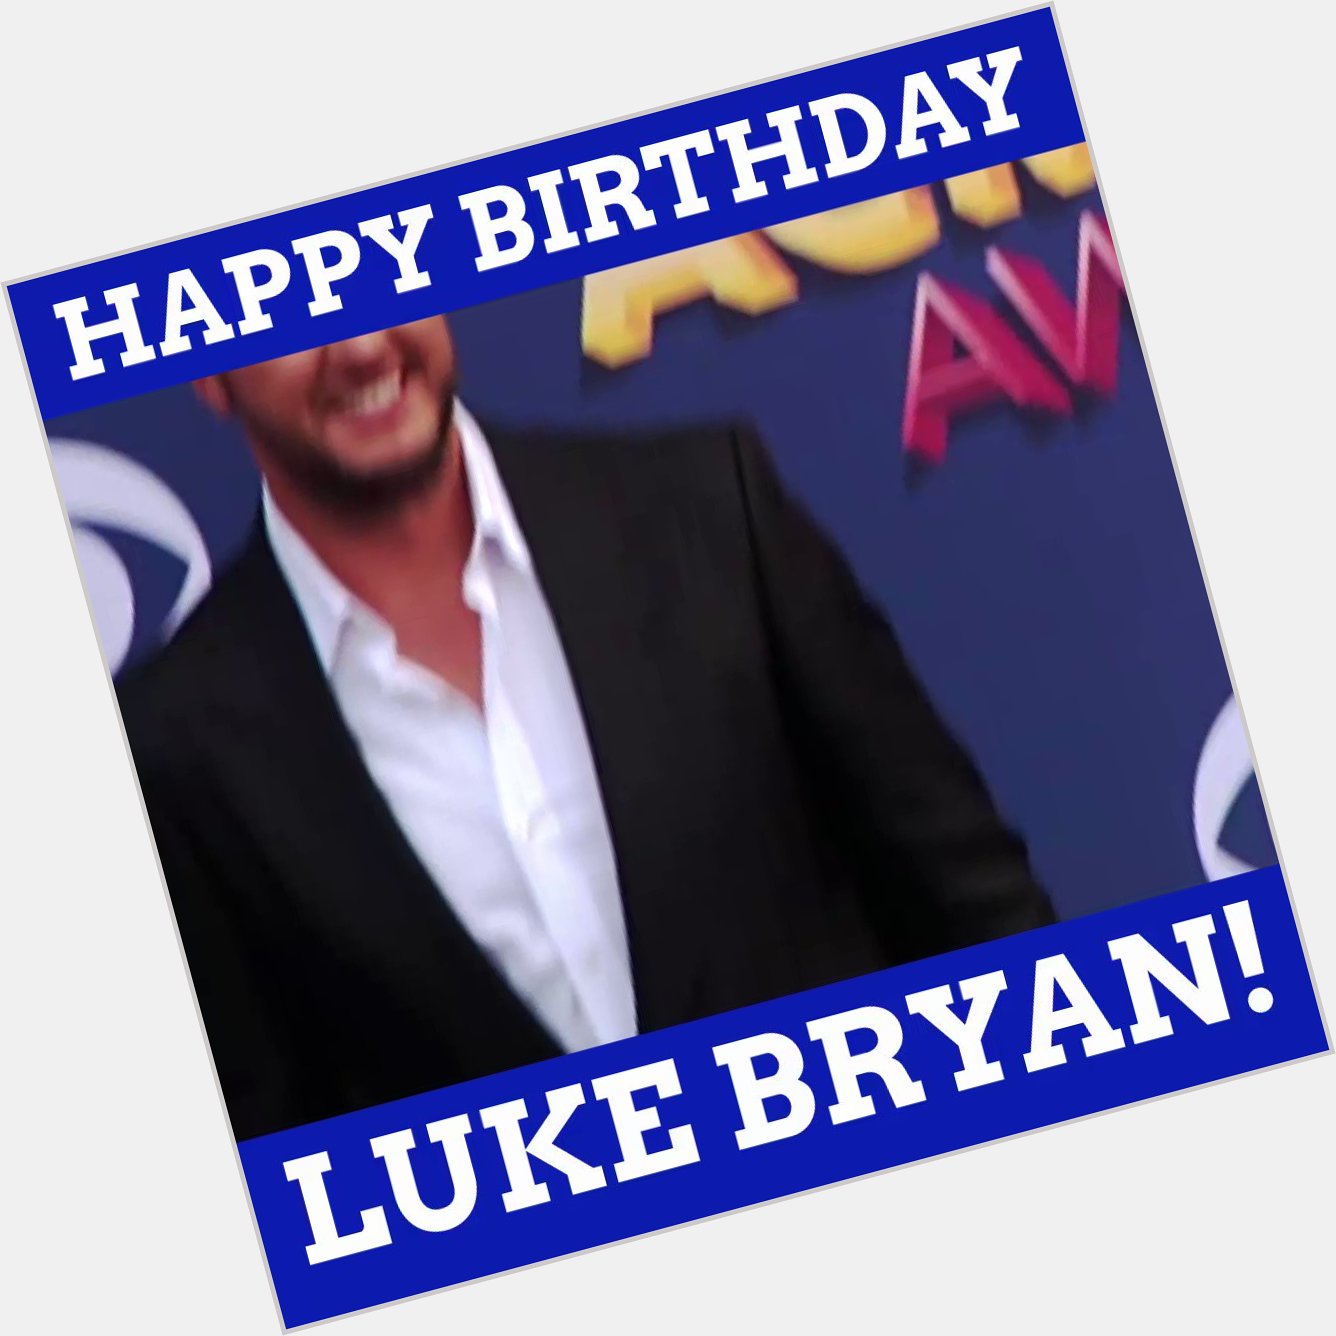 Happy Birthday, Luke Bryan!  